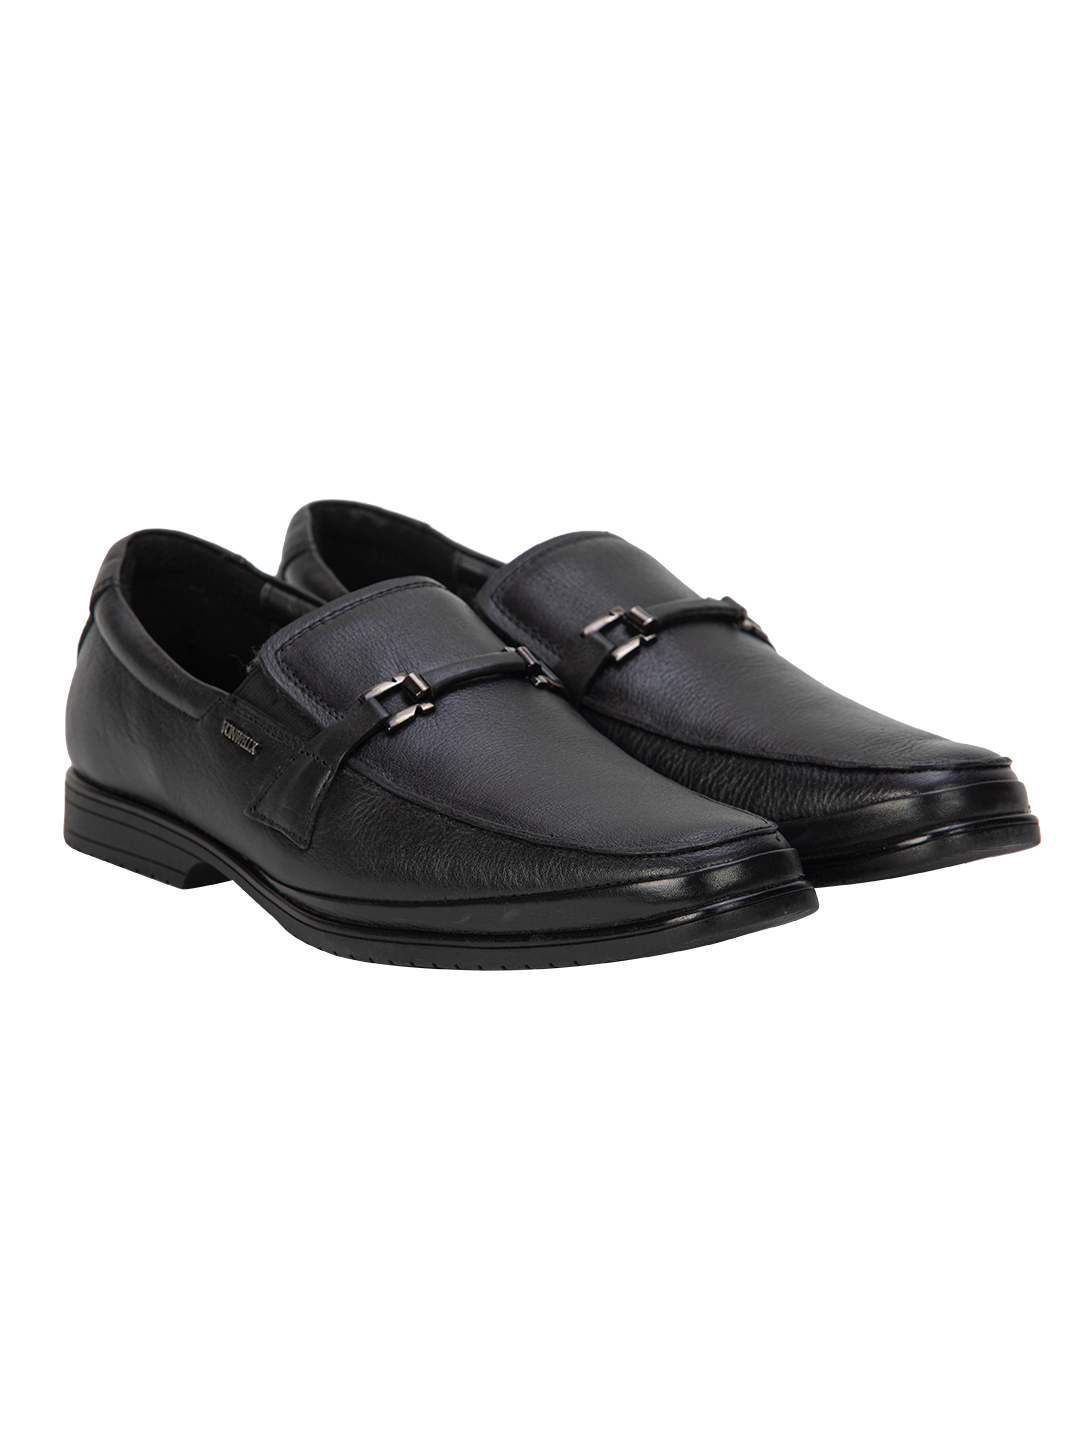 Buy Von Wellx Germany Comfort Black Jace Shoes Online in Kochi